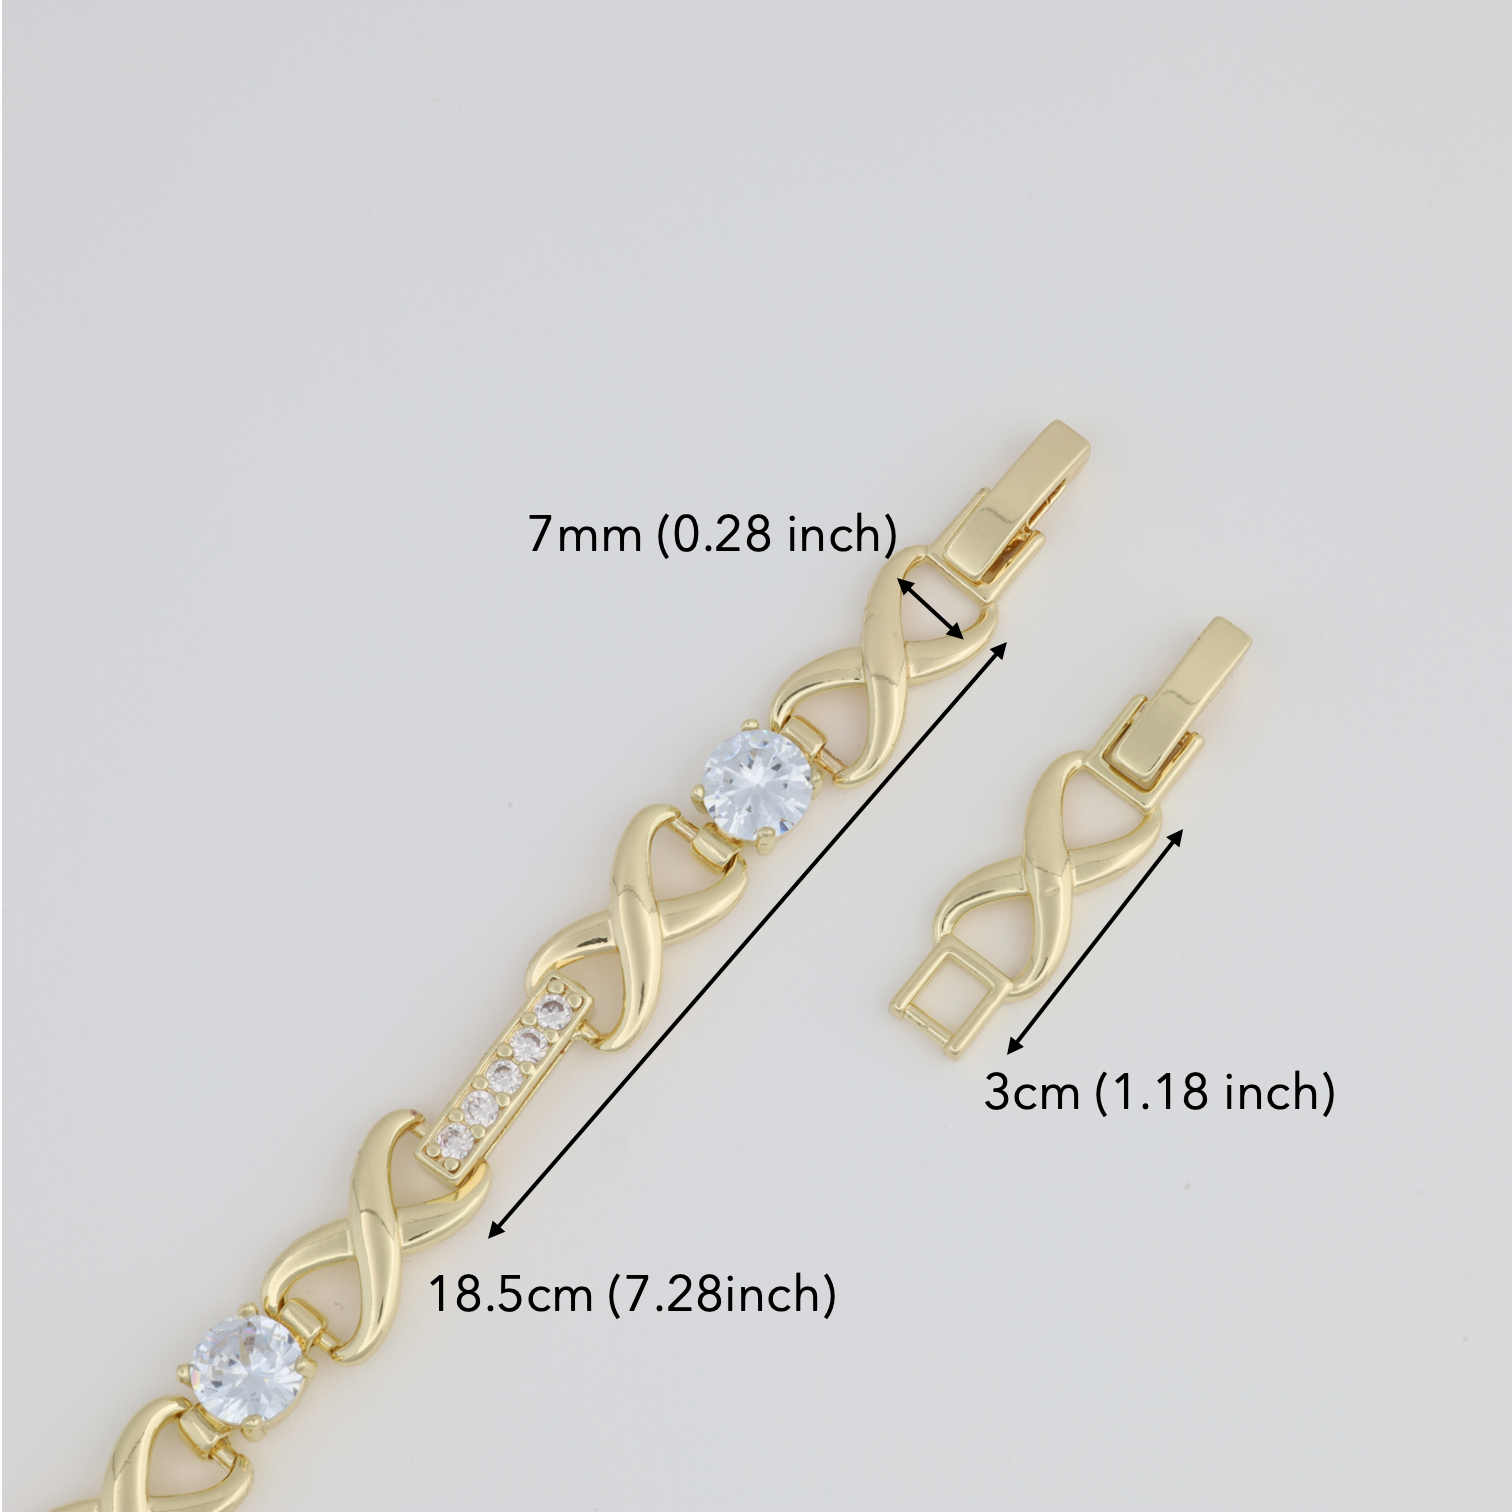 White Bracelet With Infinity Pendant